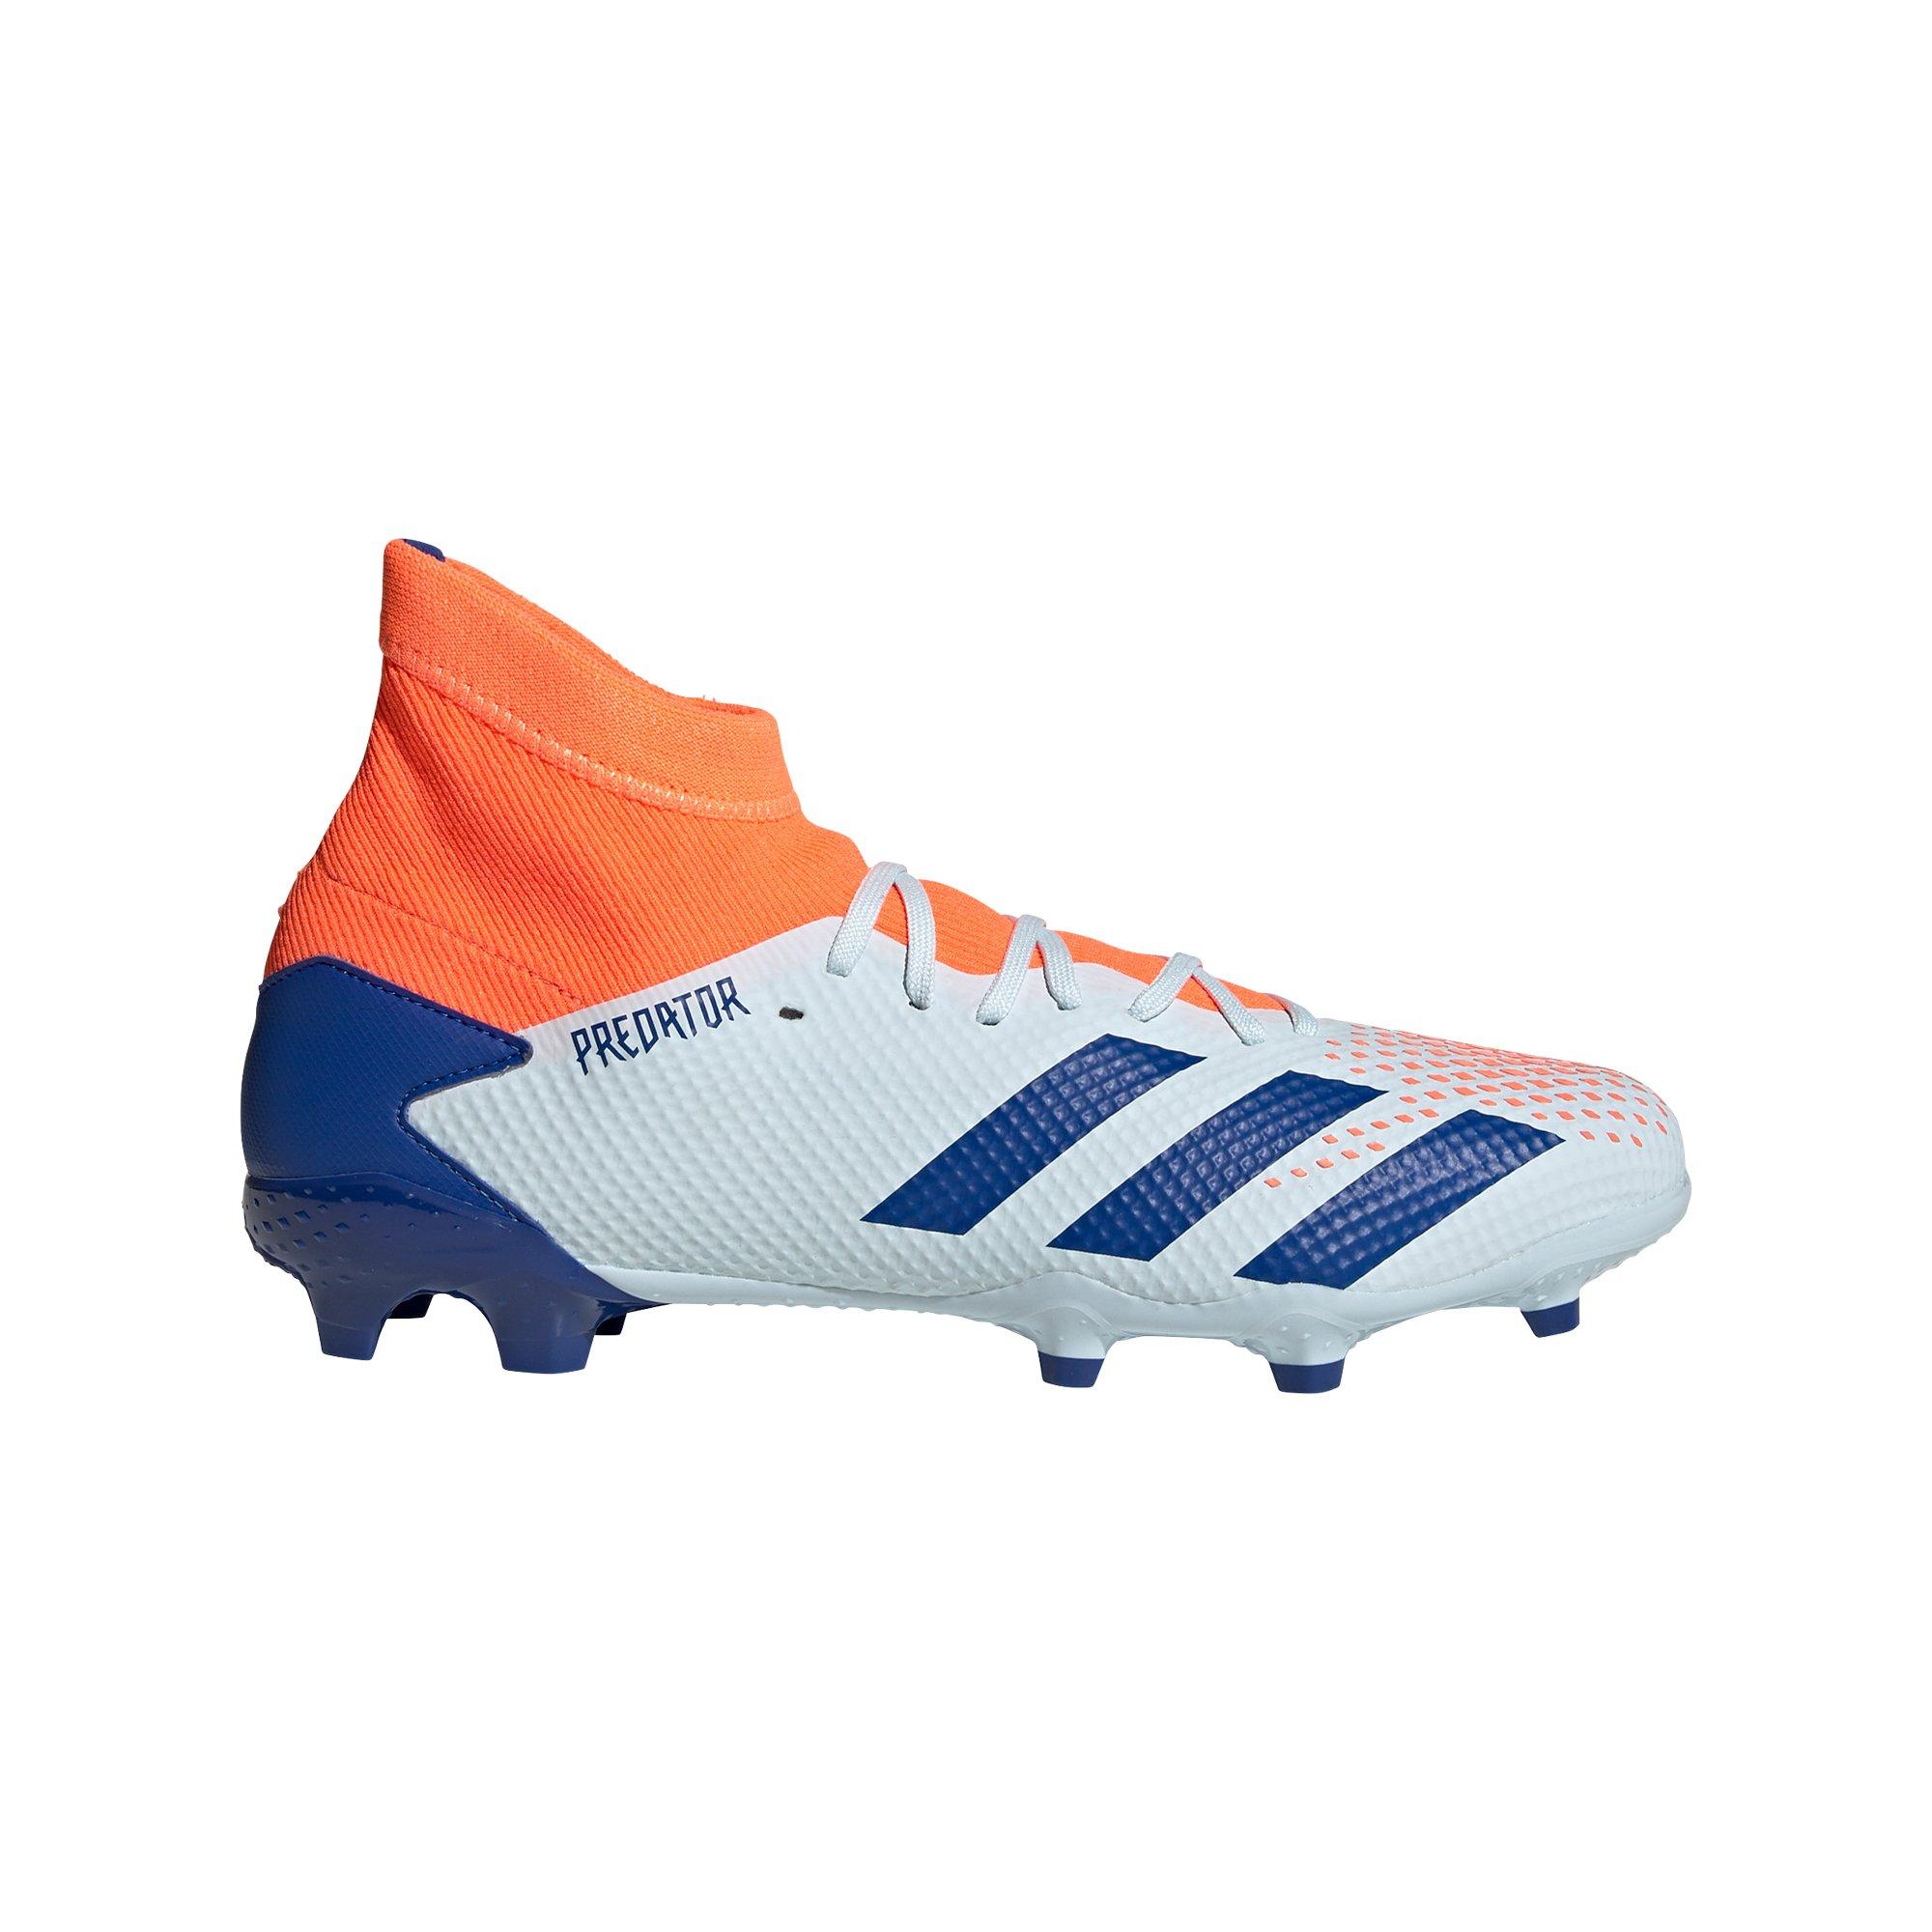 adidas predator blue and orange